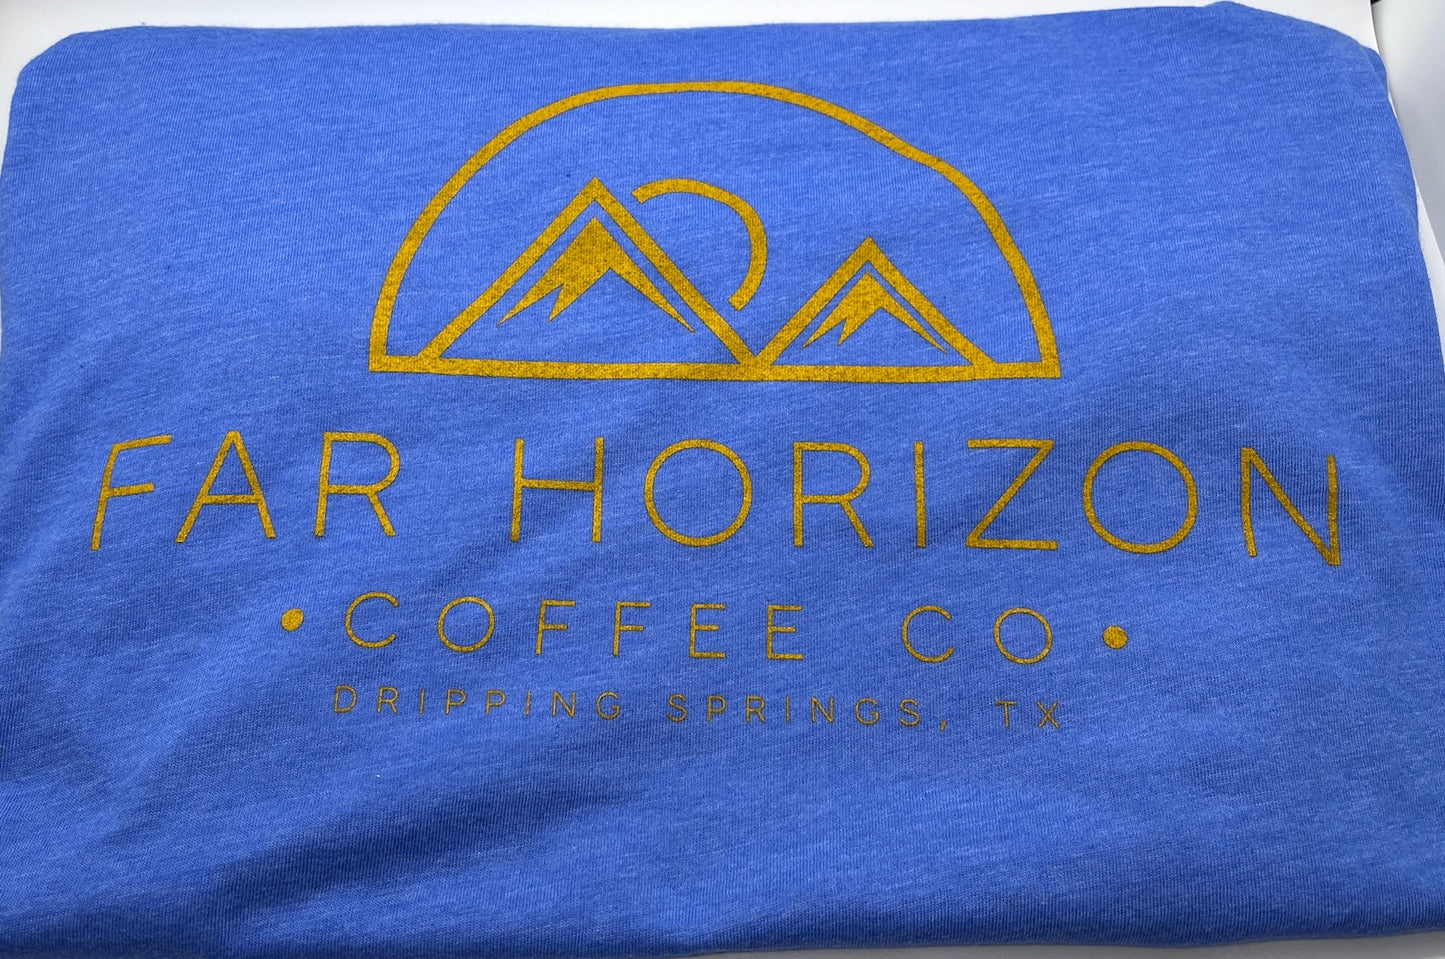 Far Horizon Coffee Co T-Shirts